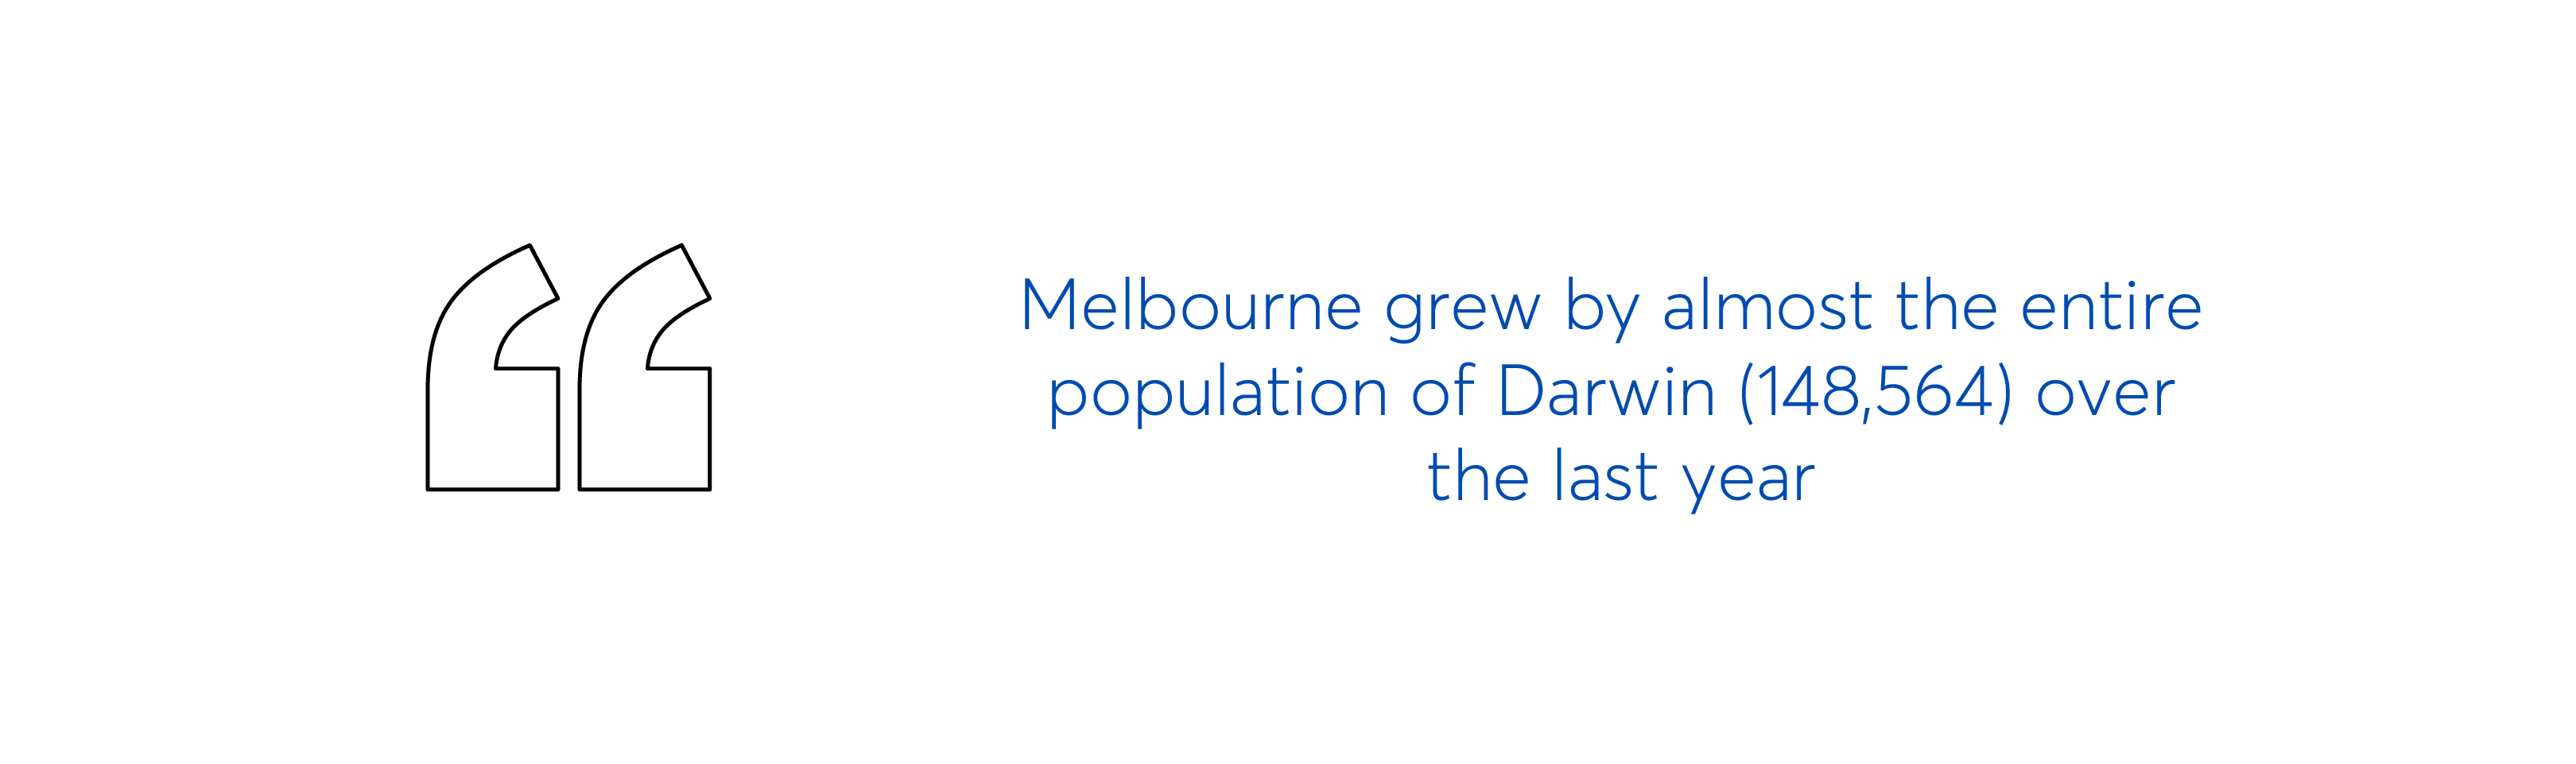 Melbourne's population growth